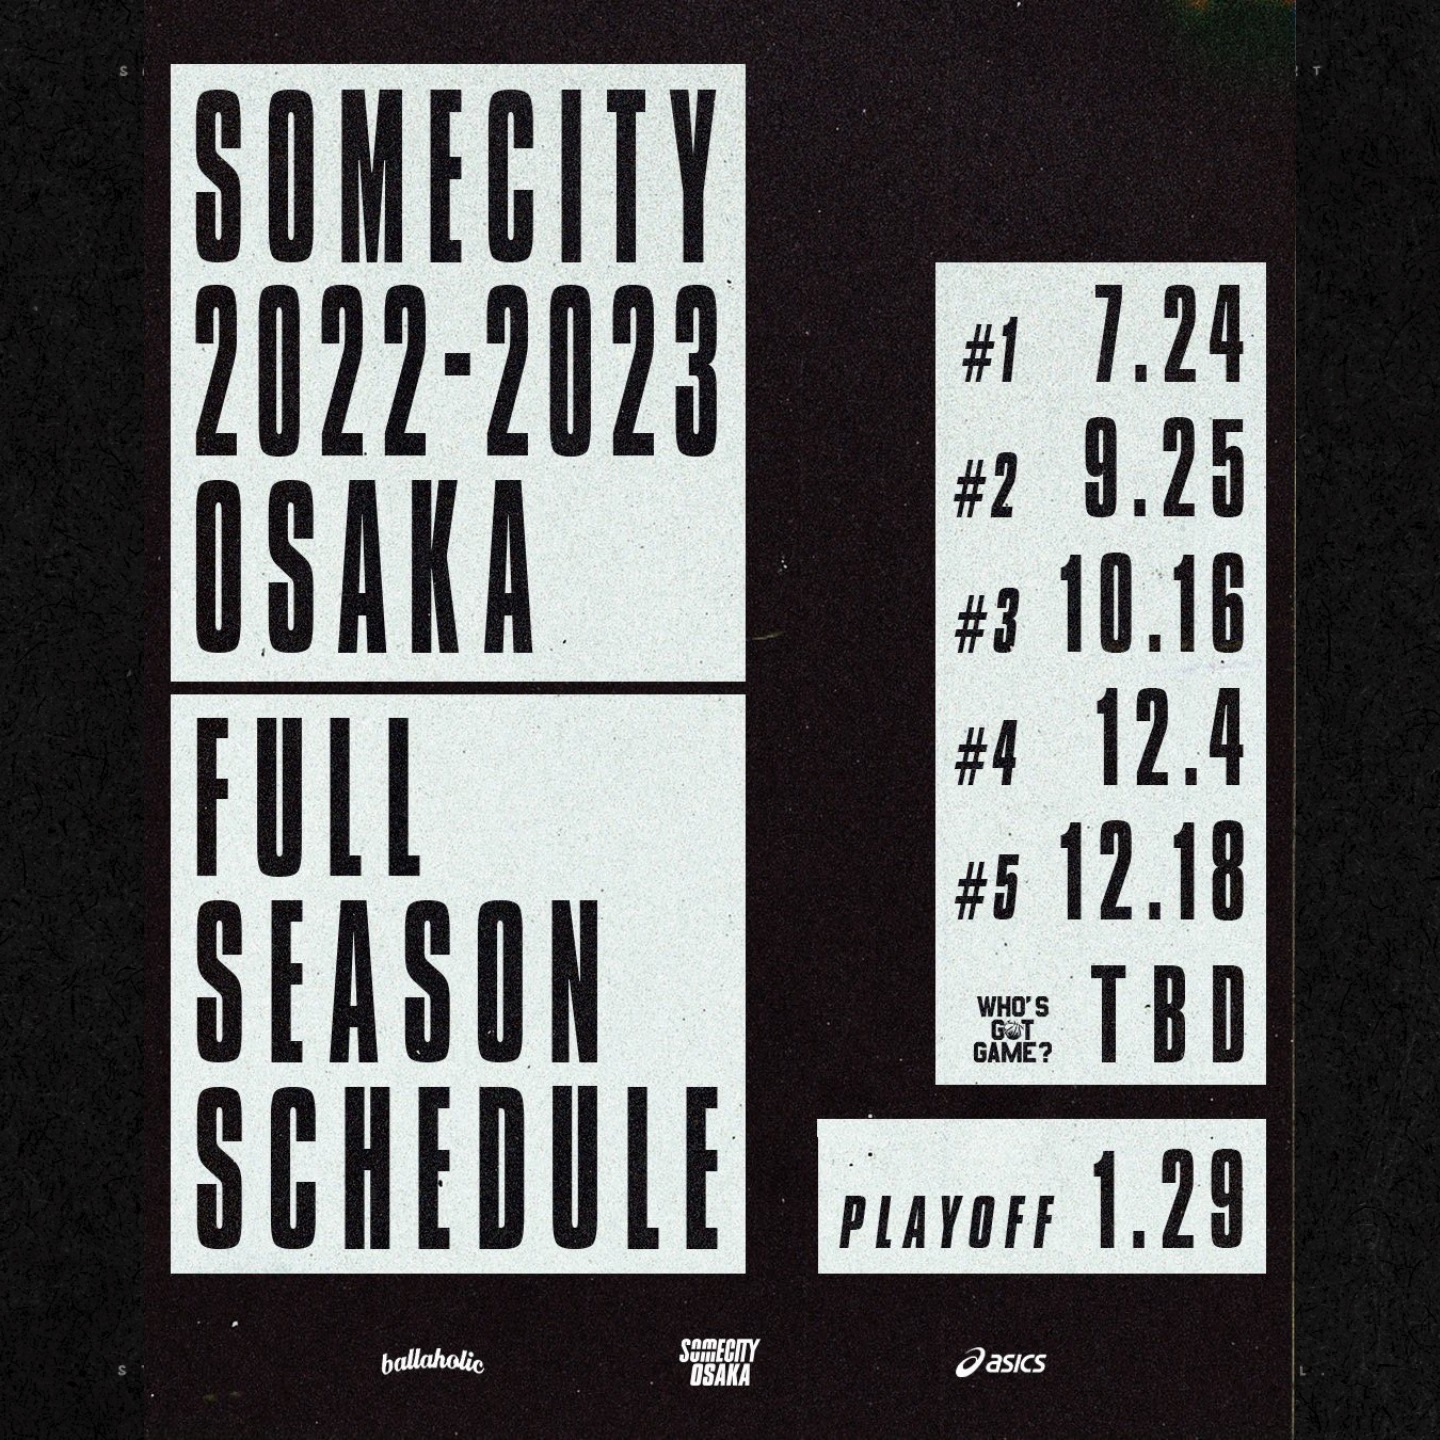 【SOMECITY OSAKA】シーズンスケジュールの発表！